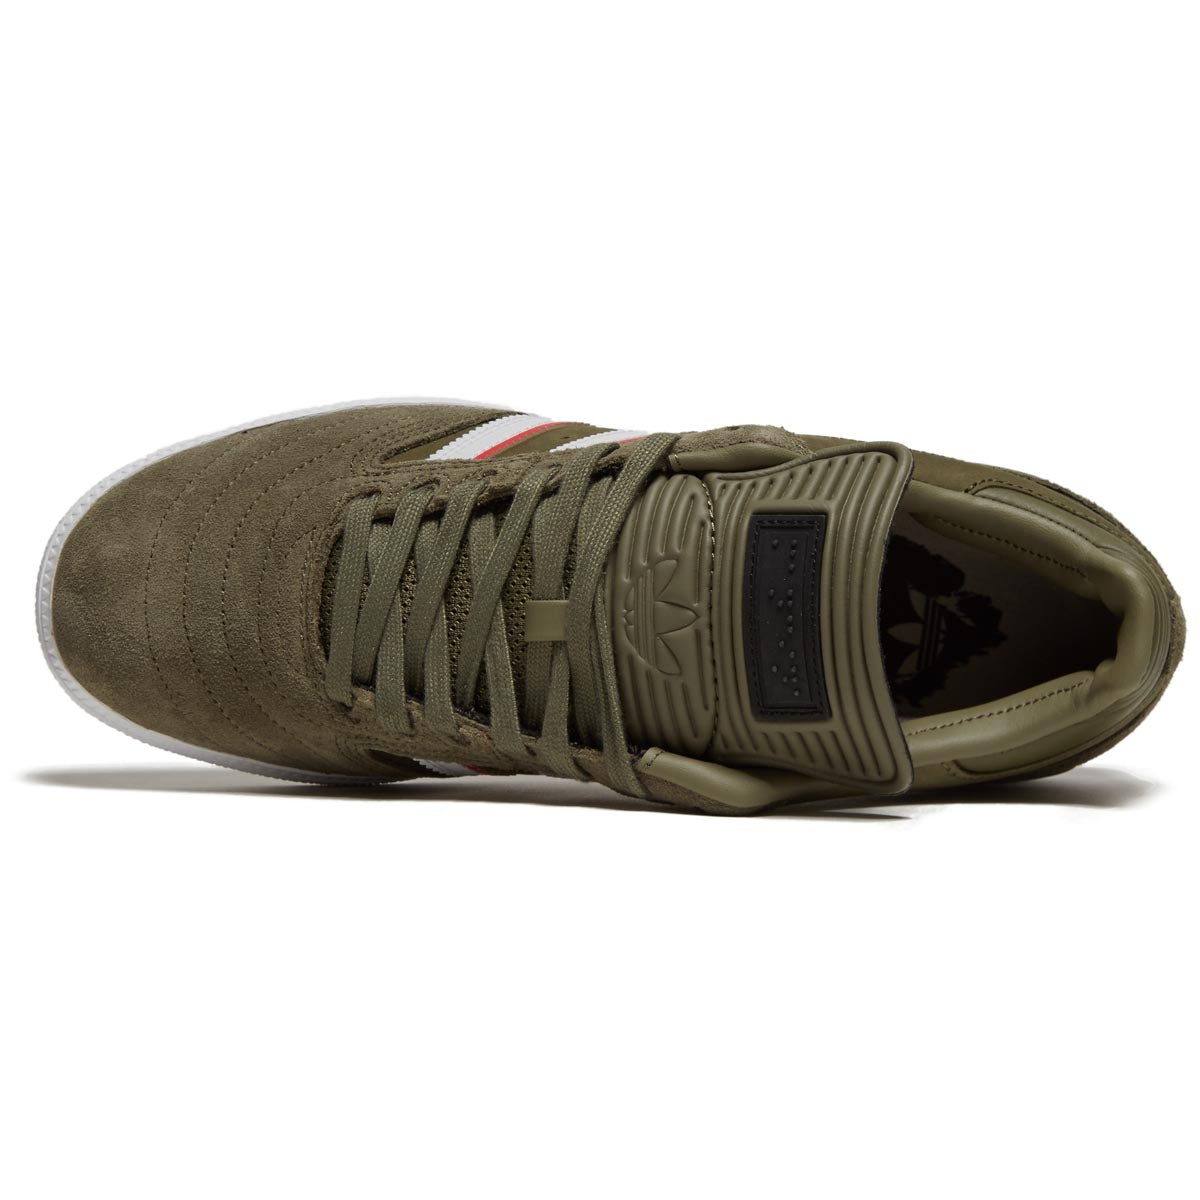 Adidas Busenitz x Dan Mancina Shoes - Olive Strata/Red/Ftwr White image 3